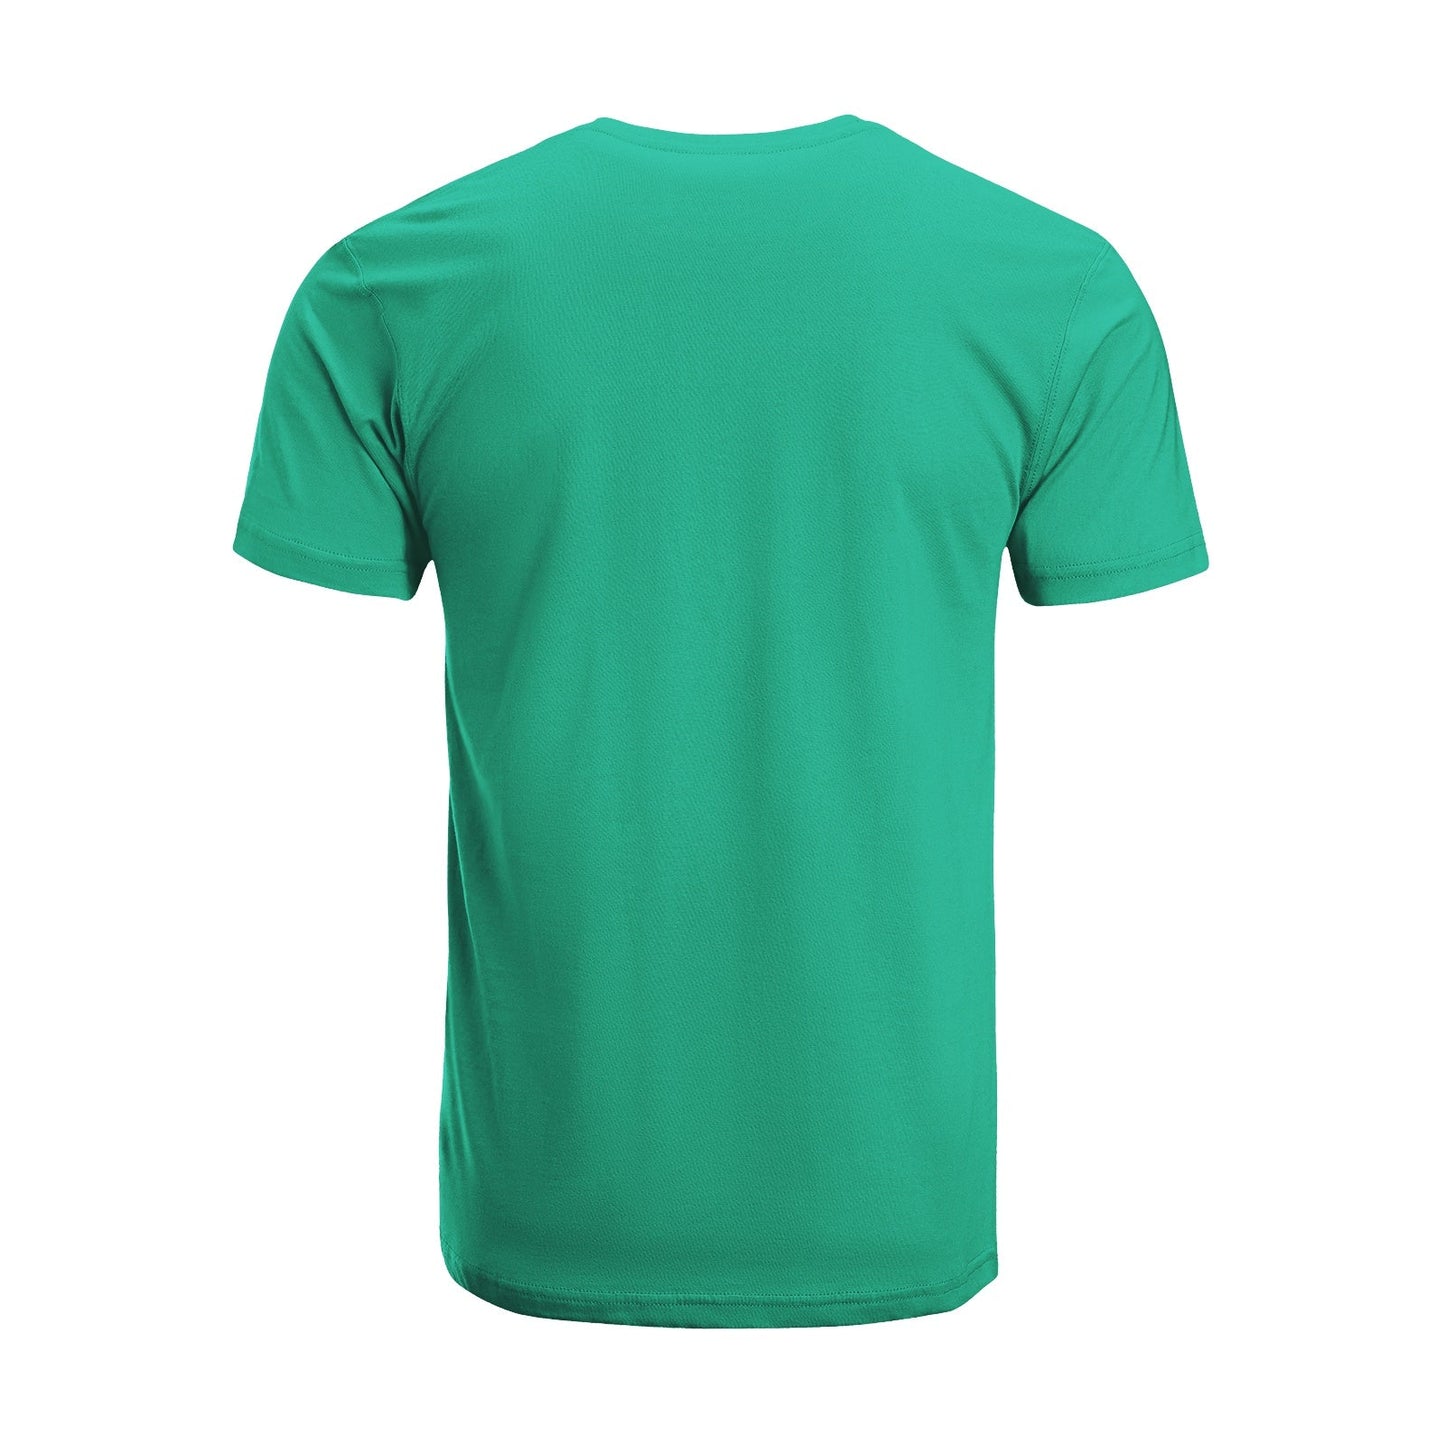 Unisex Short Sleeve Crew Neck Cotton Jersey T-Shirt MOM 35